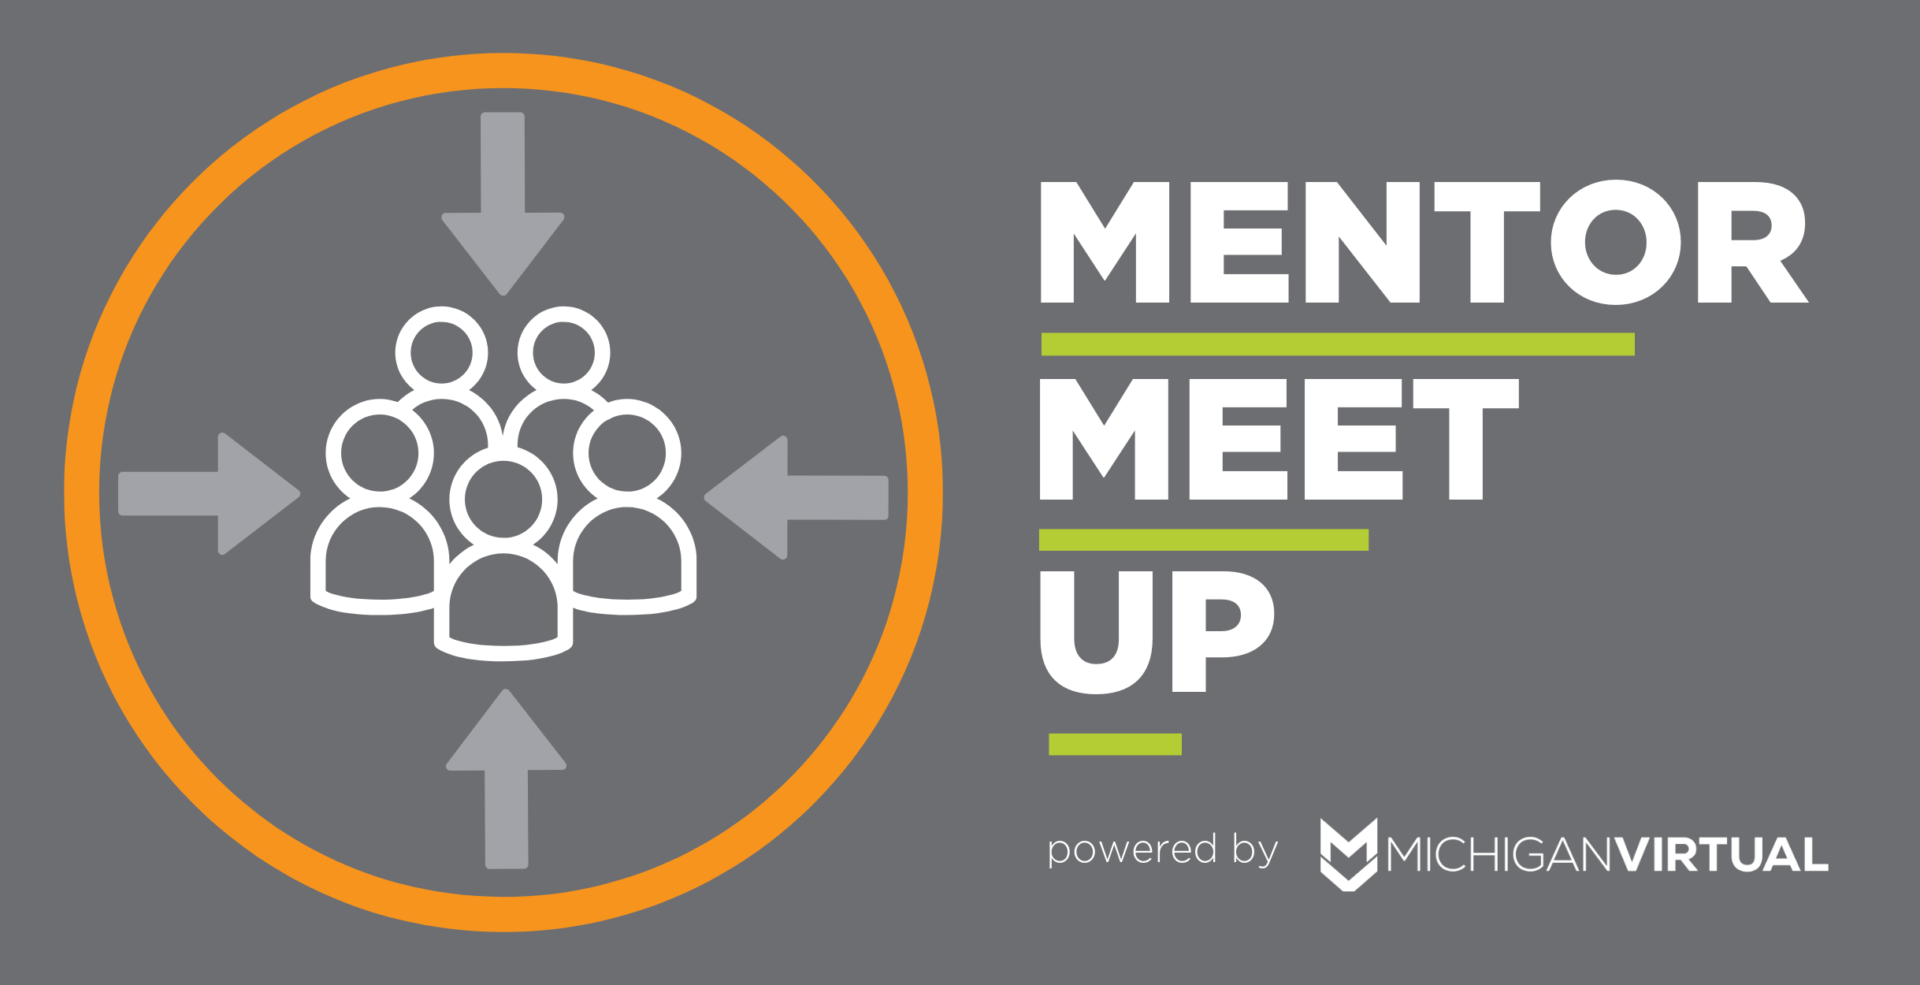 Mentor Meet Up, powered by Michigan Virtual